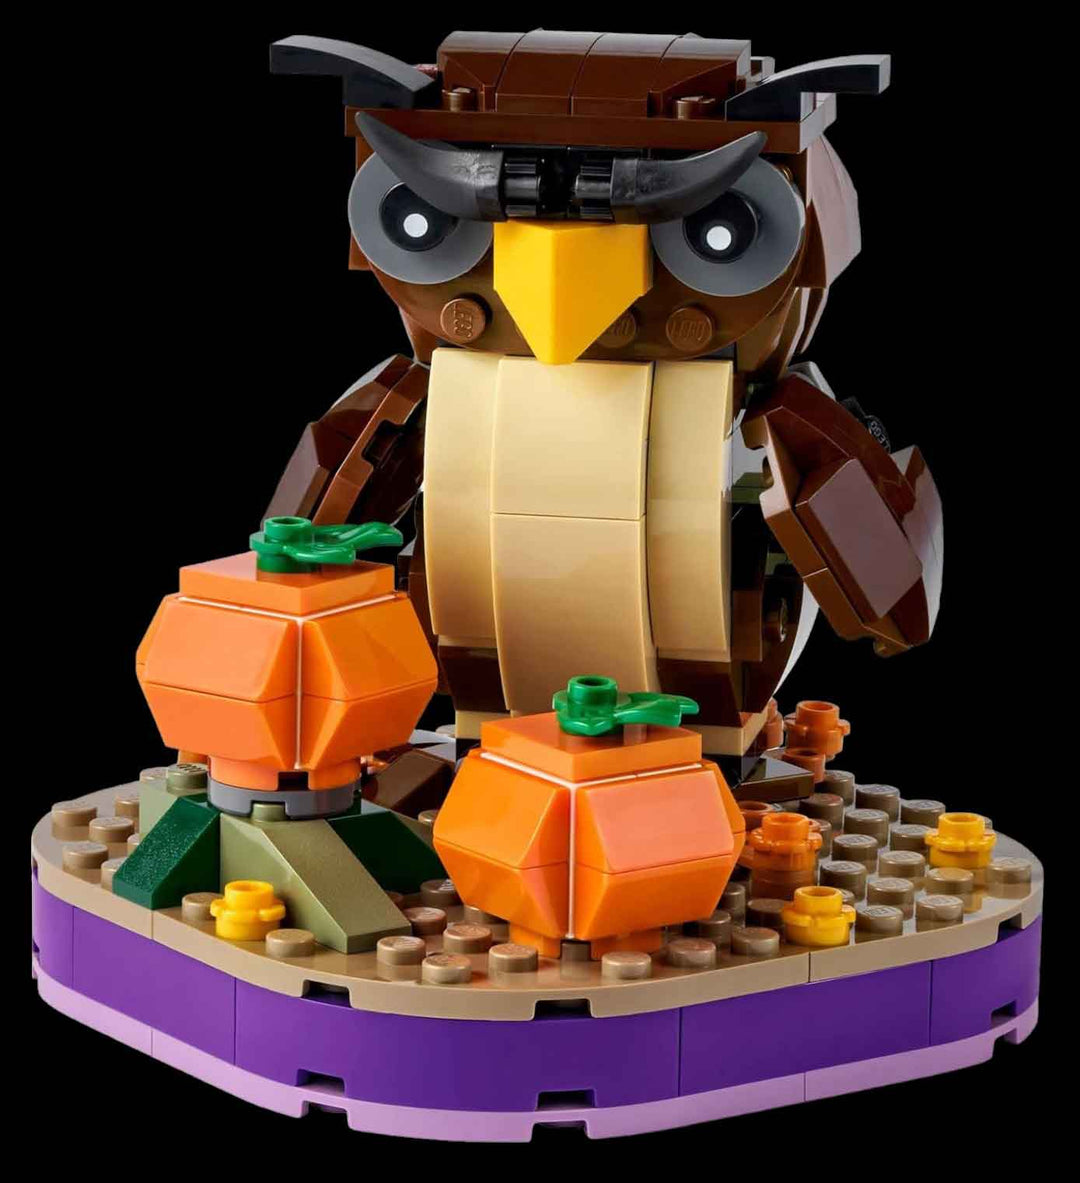 LEGO Halloween Owl lego build, owl with orange pumpkin